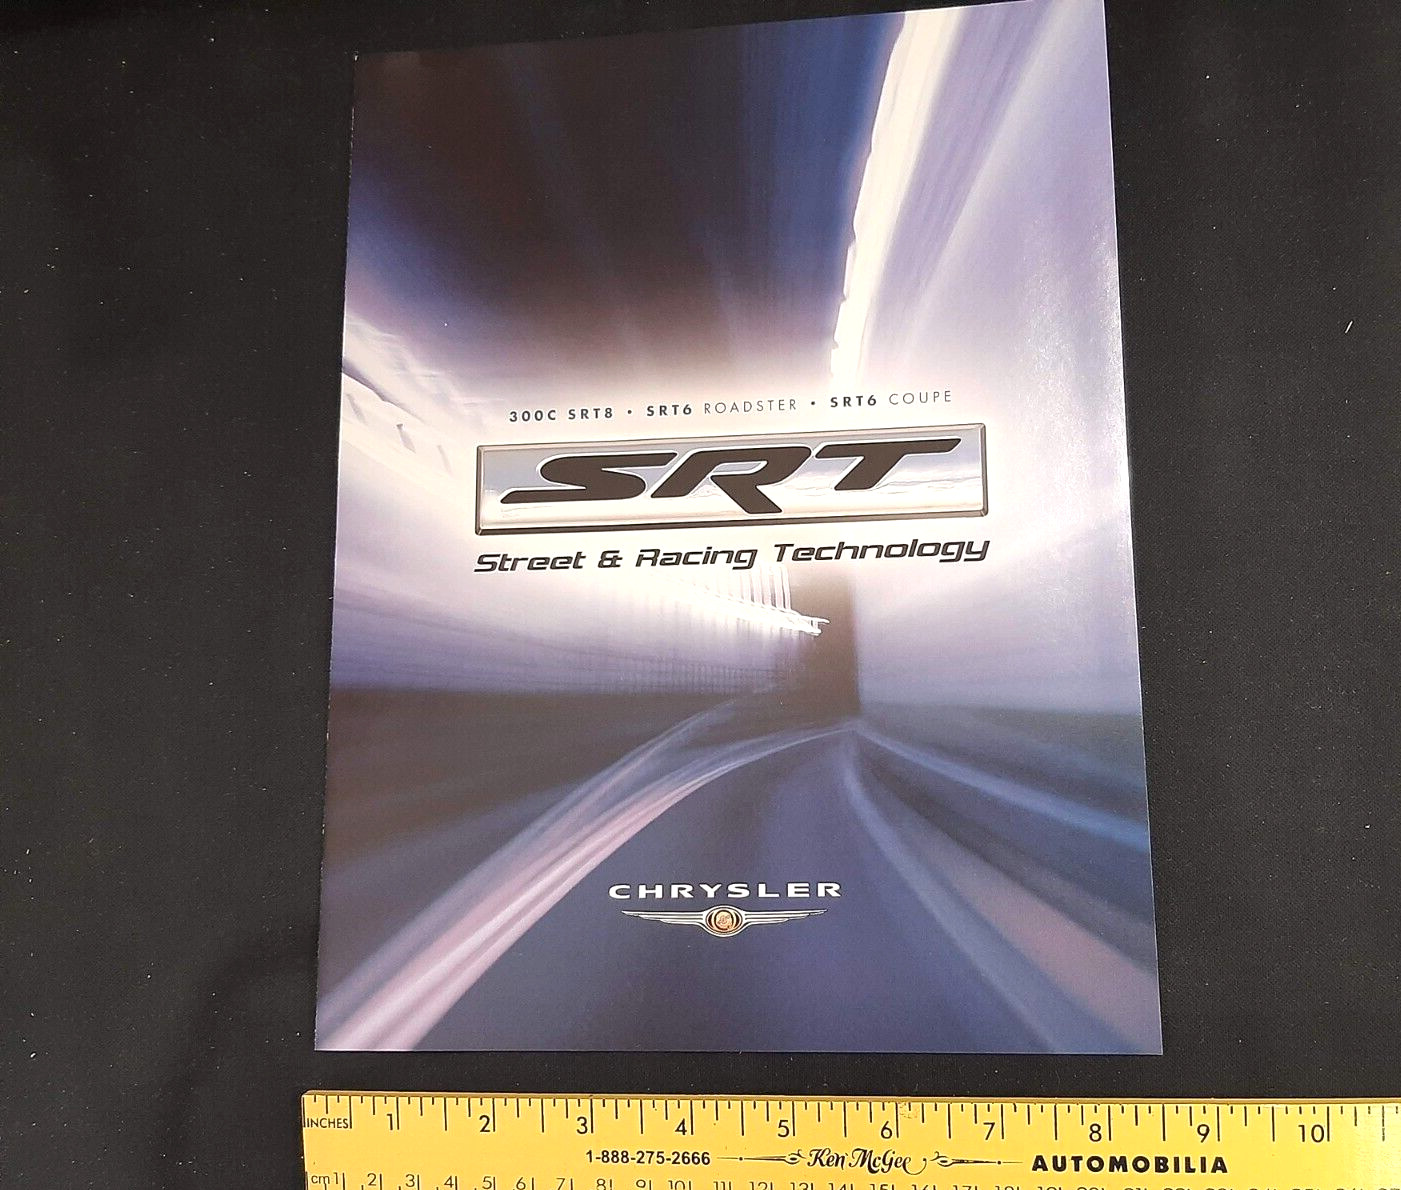 2005 CHRYSLER SRT - 300C SRT8, SRT6 Roadster, SRT6 Coupe Sales Brochure